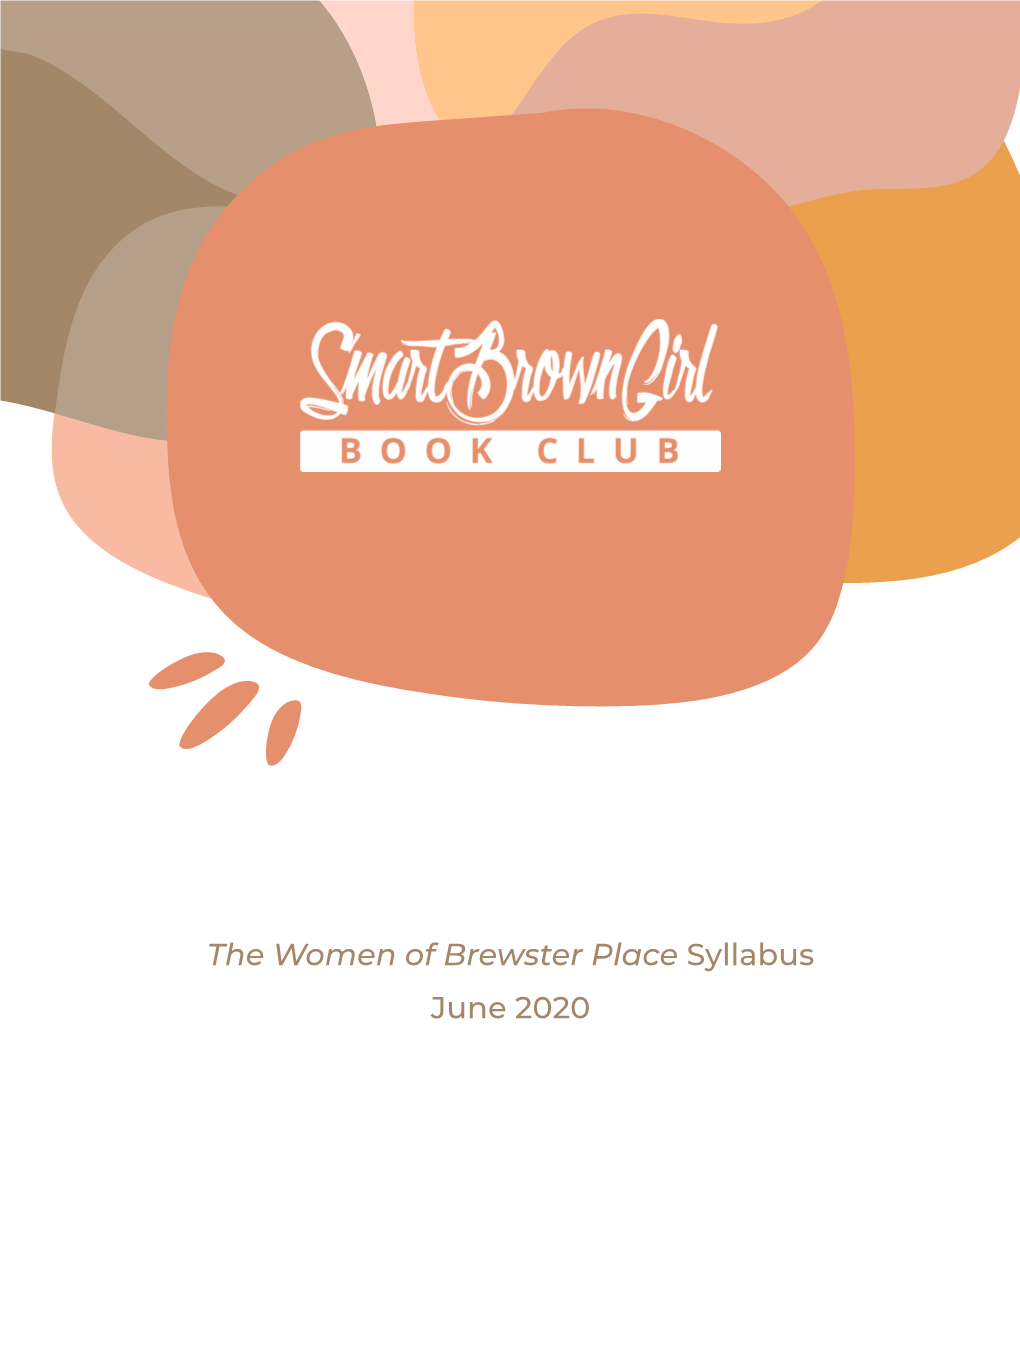 The Women of Brewster Place Syllabus June 2020 © 2019 BHK LLC